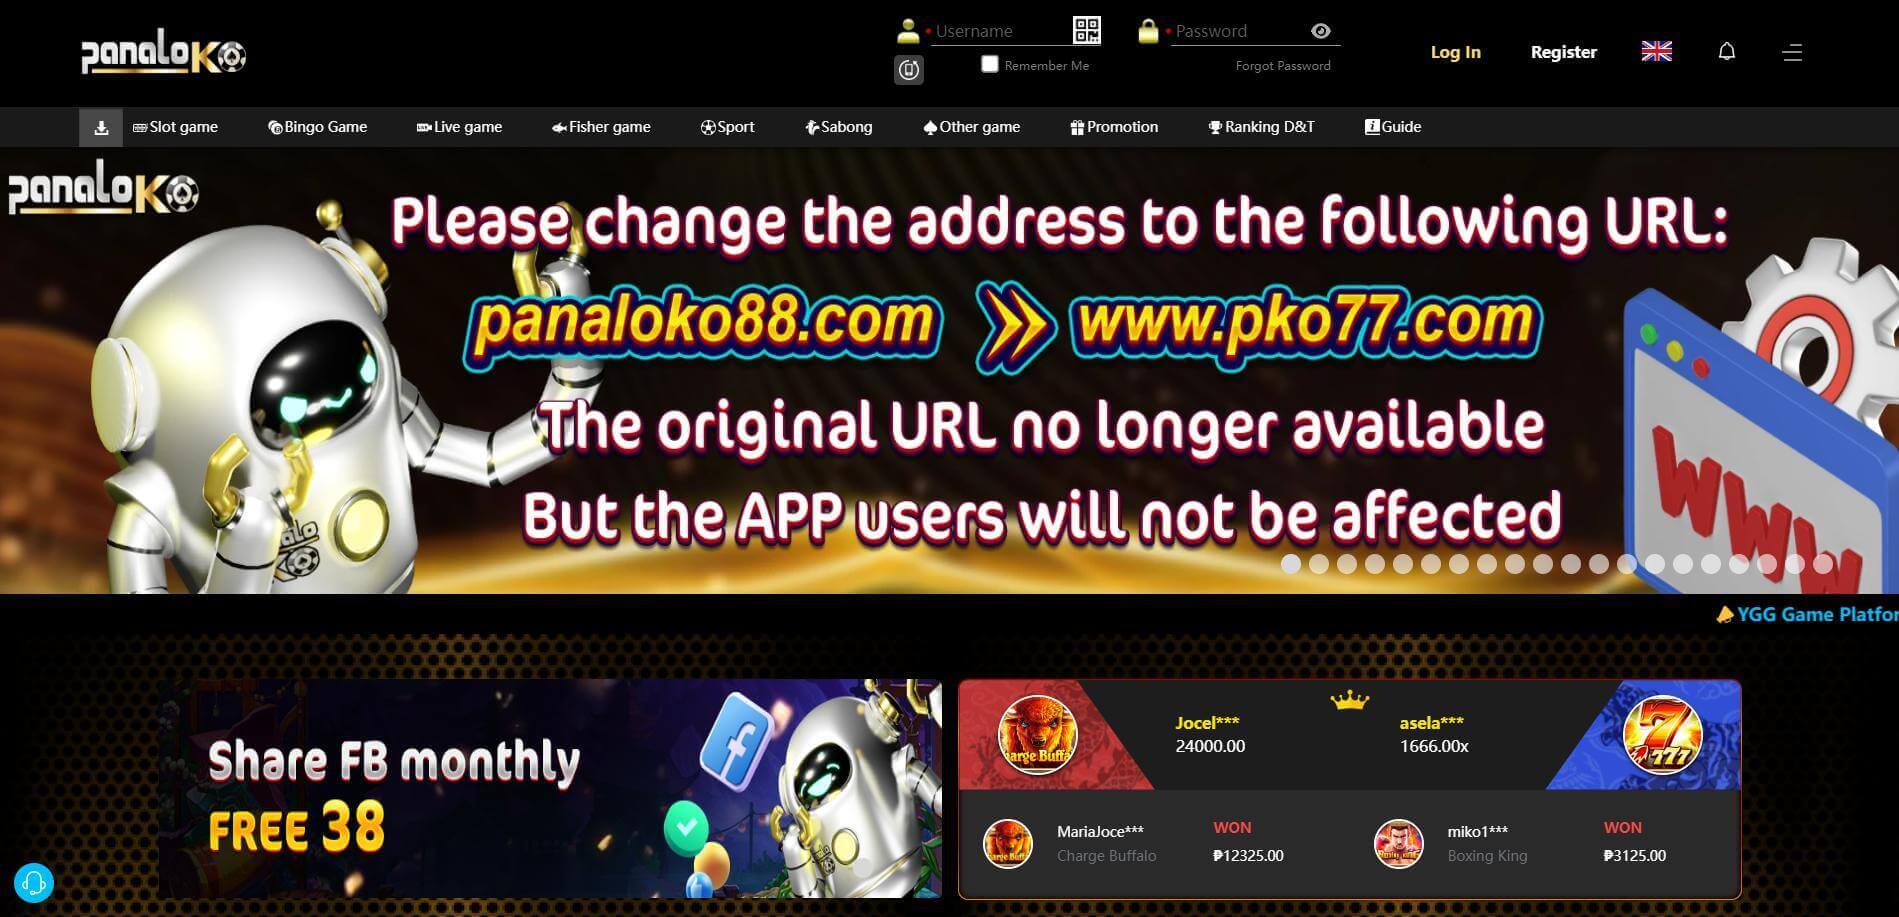 panaloko homepage